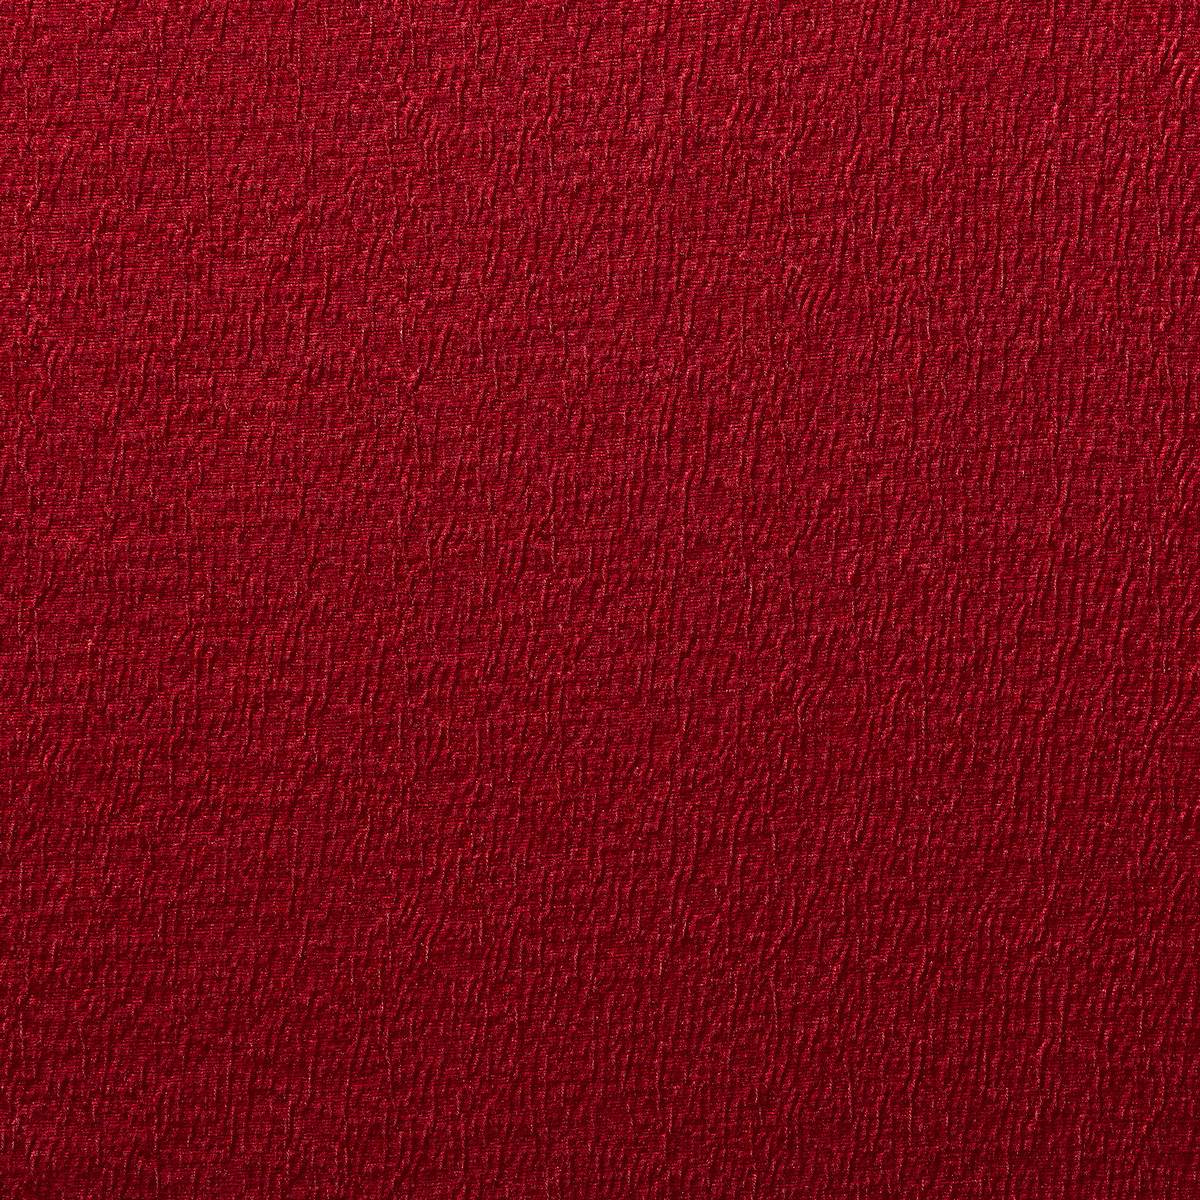 Alchemy Rosso Fabric by Fryetts